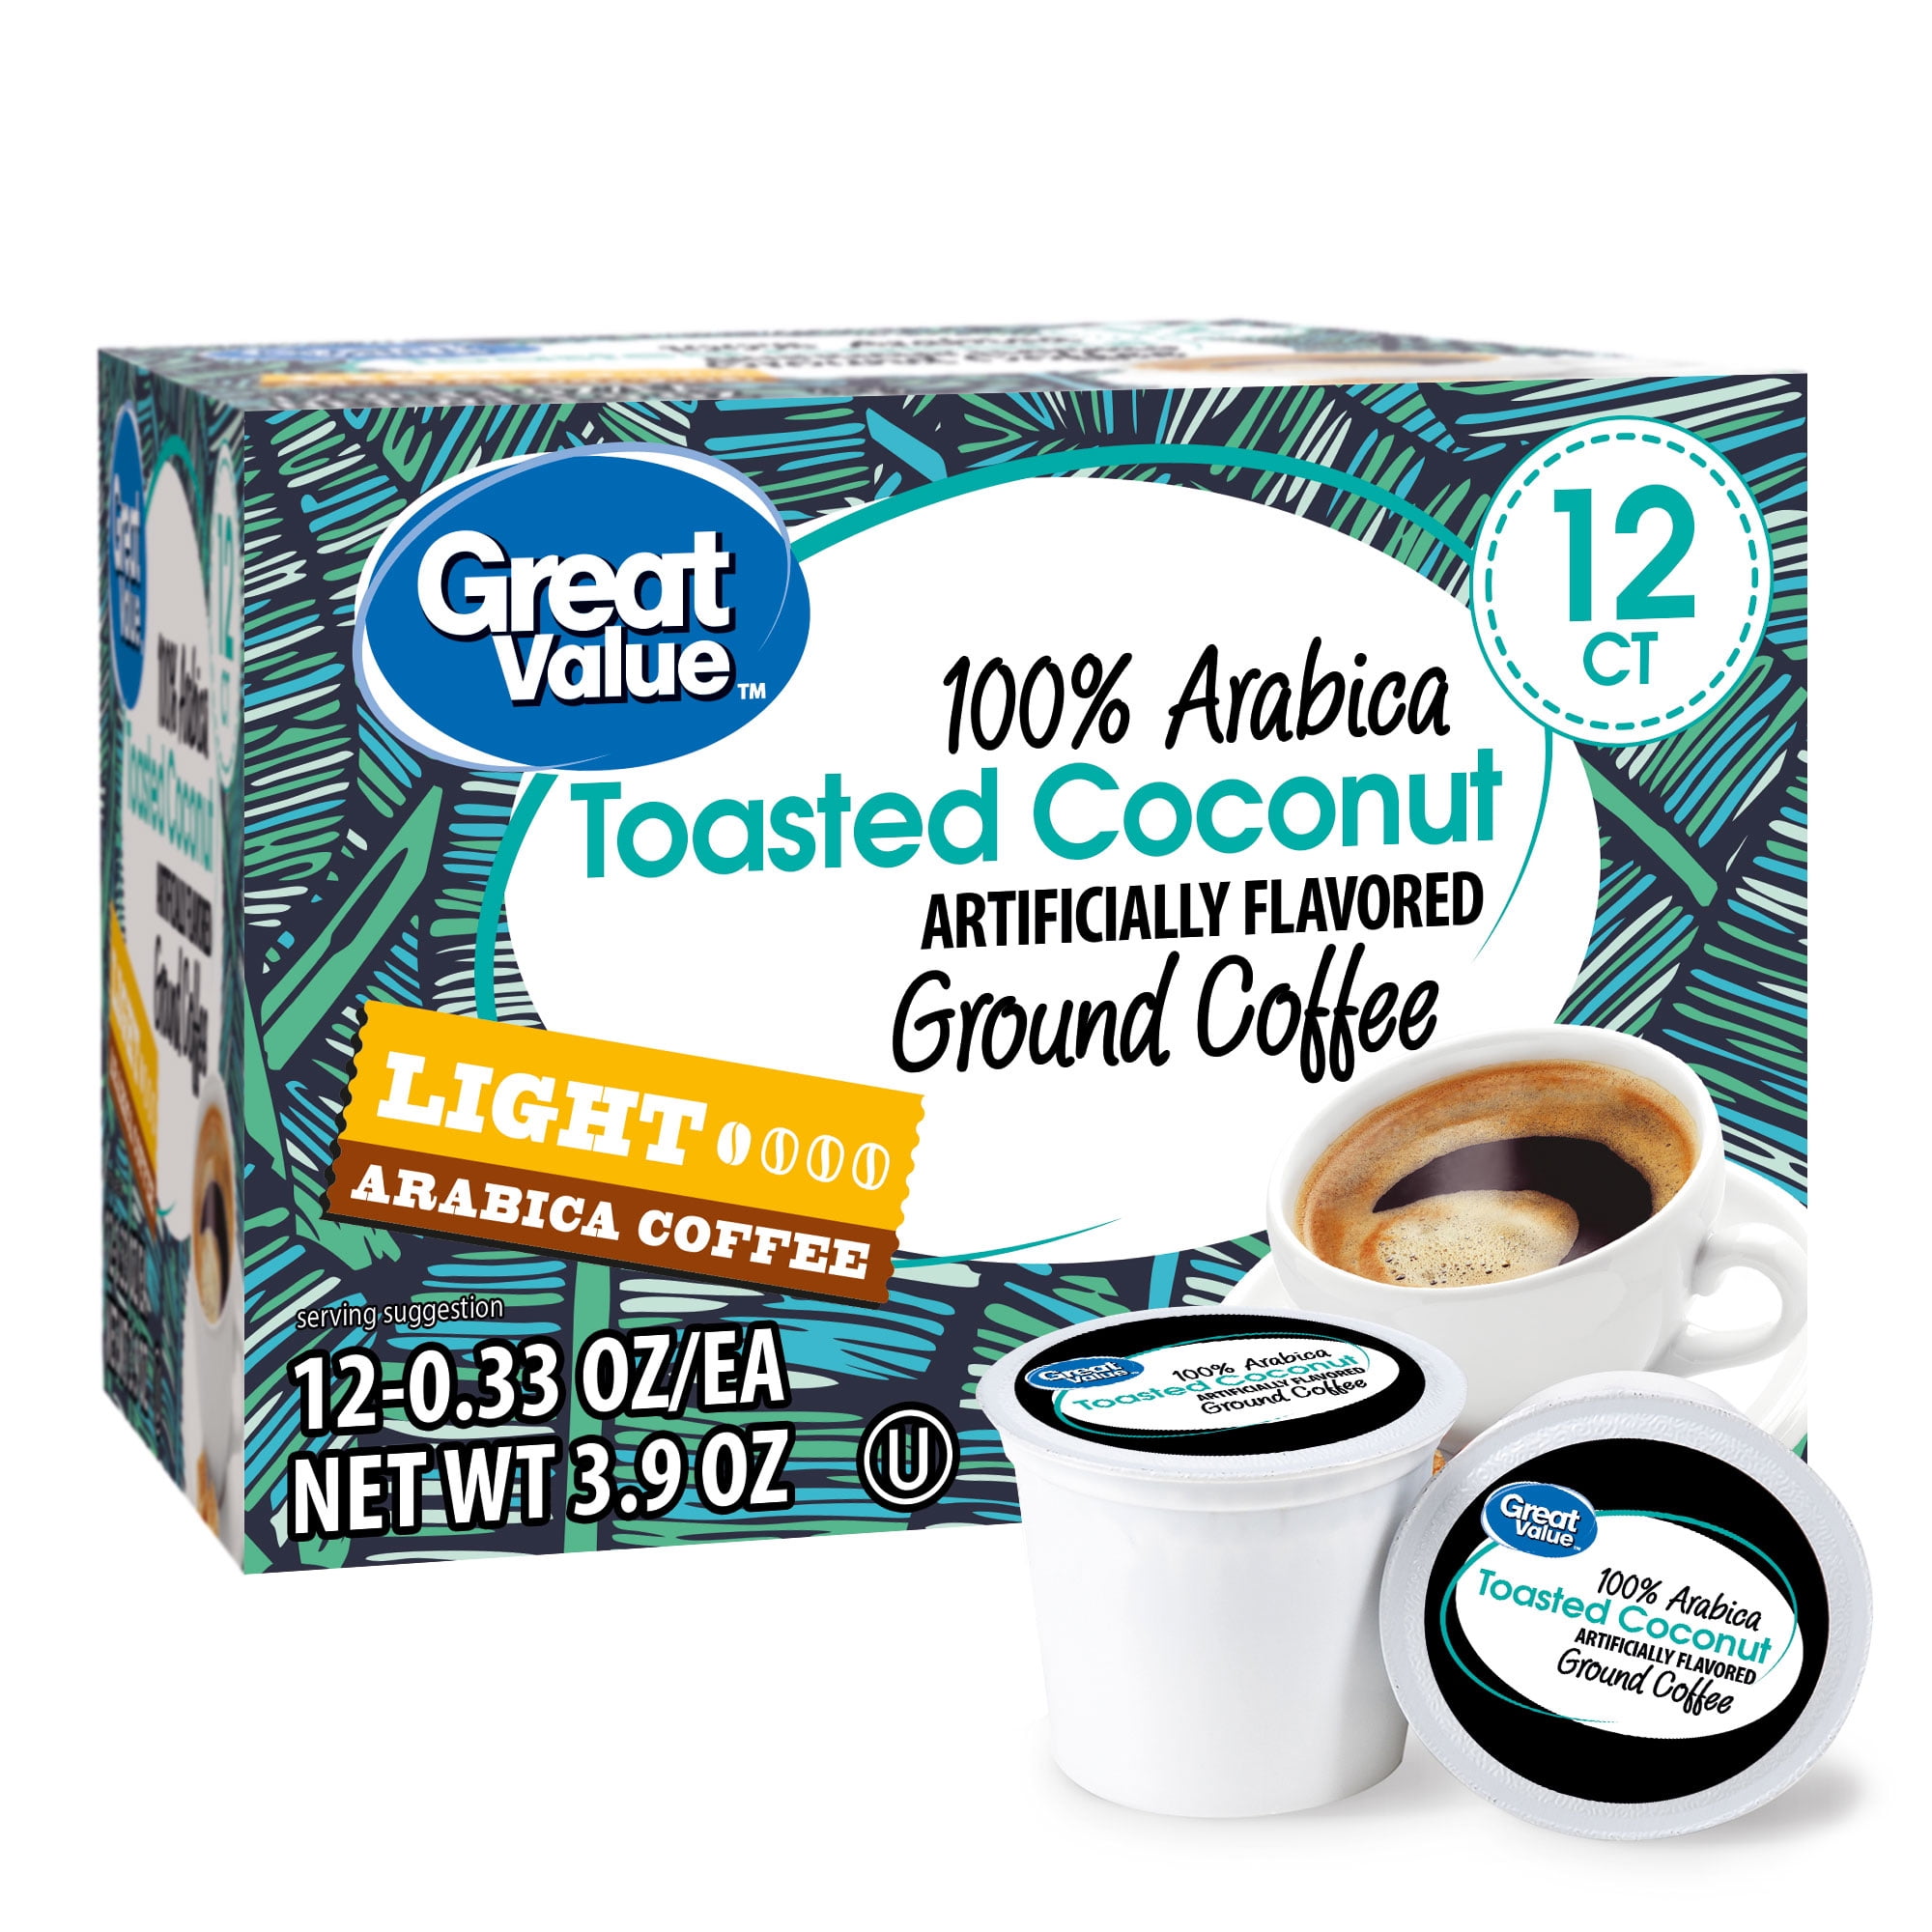 Great Value 100% Arabica Toasted Coconut Light Roast Arabica Coffee Pods, 12 Ct